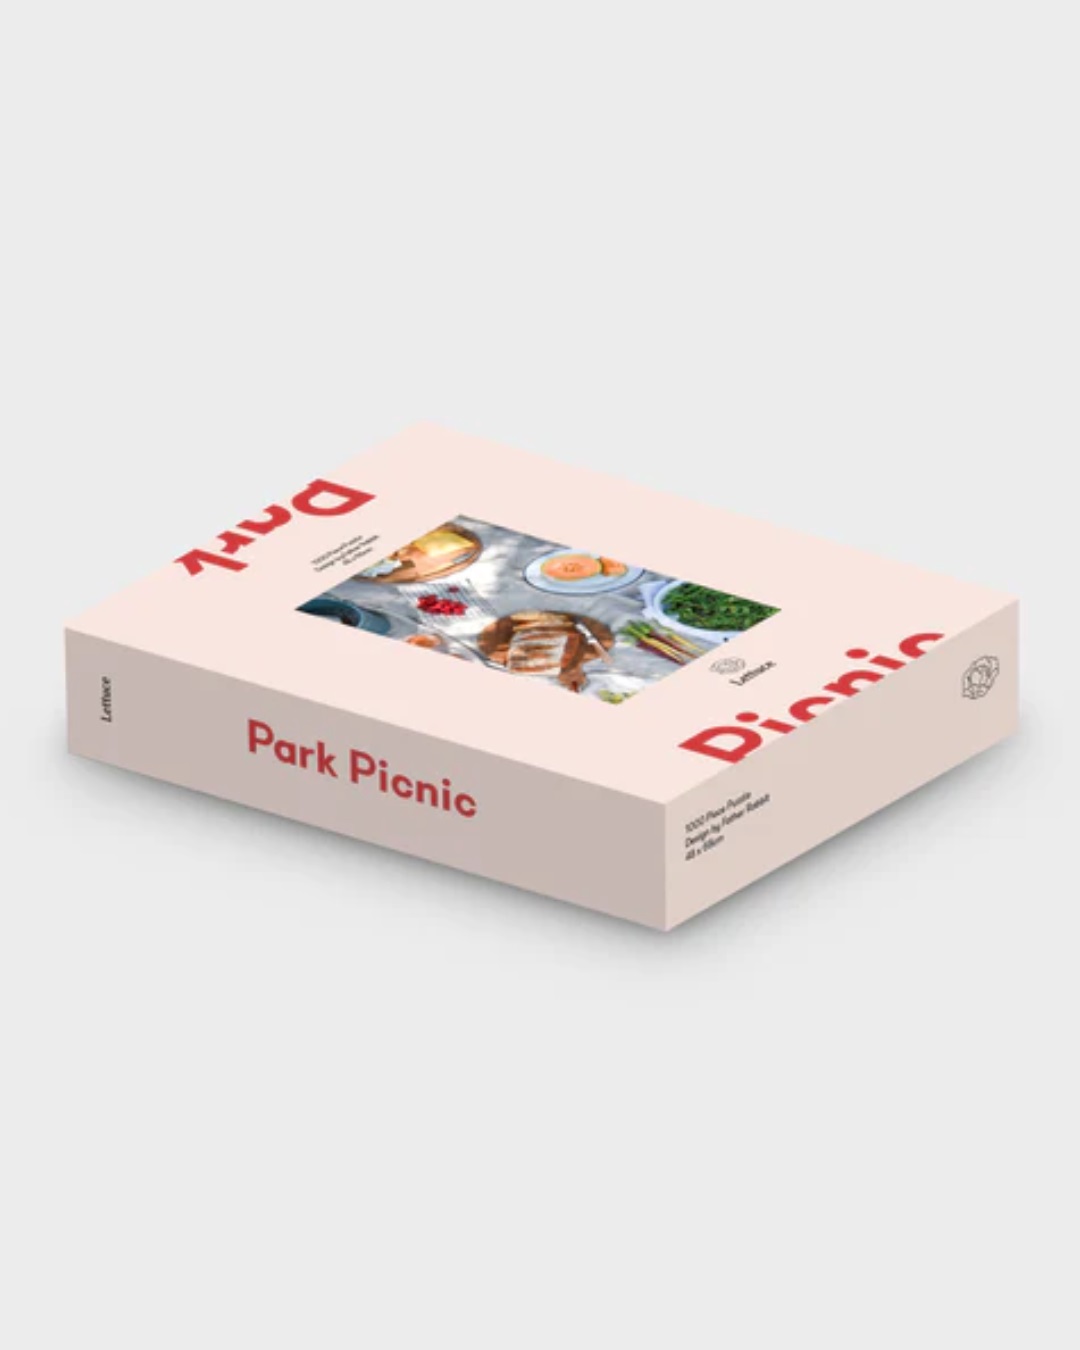 Picnic park puzzle in box